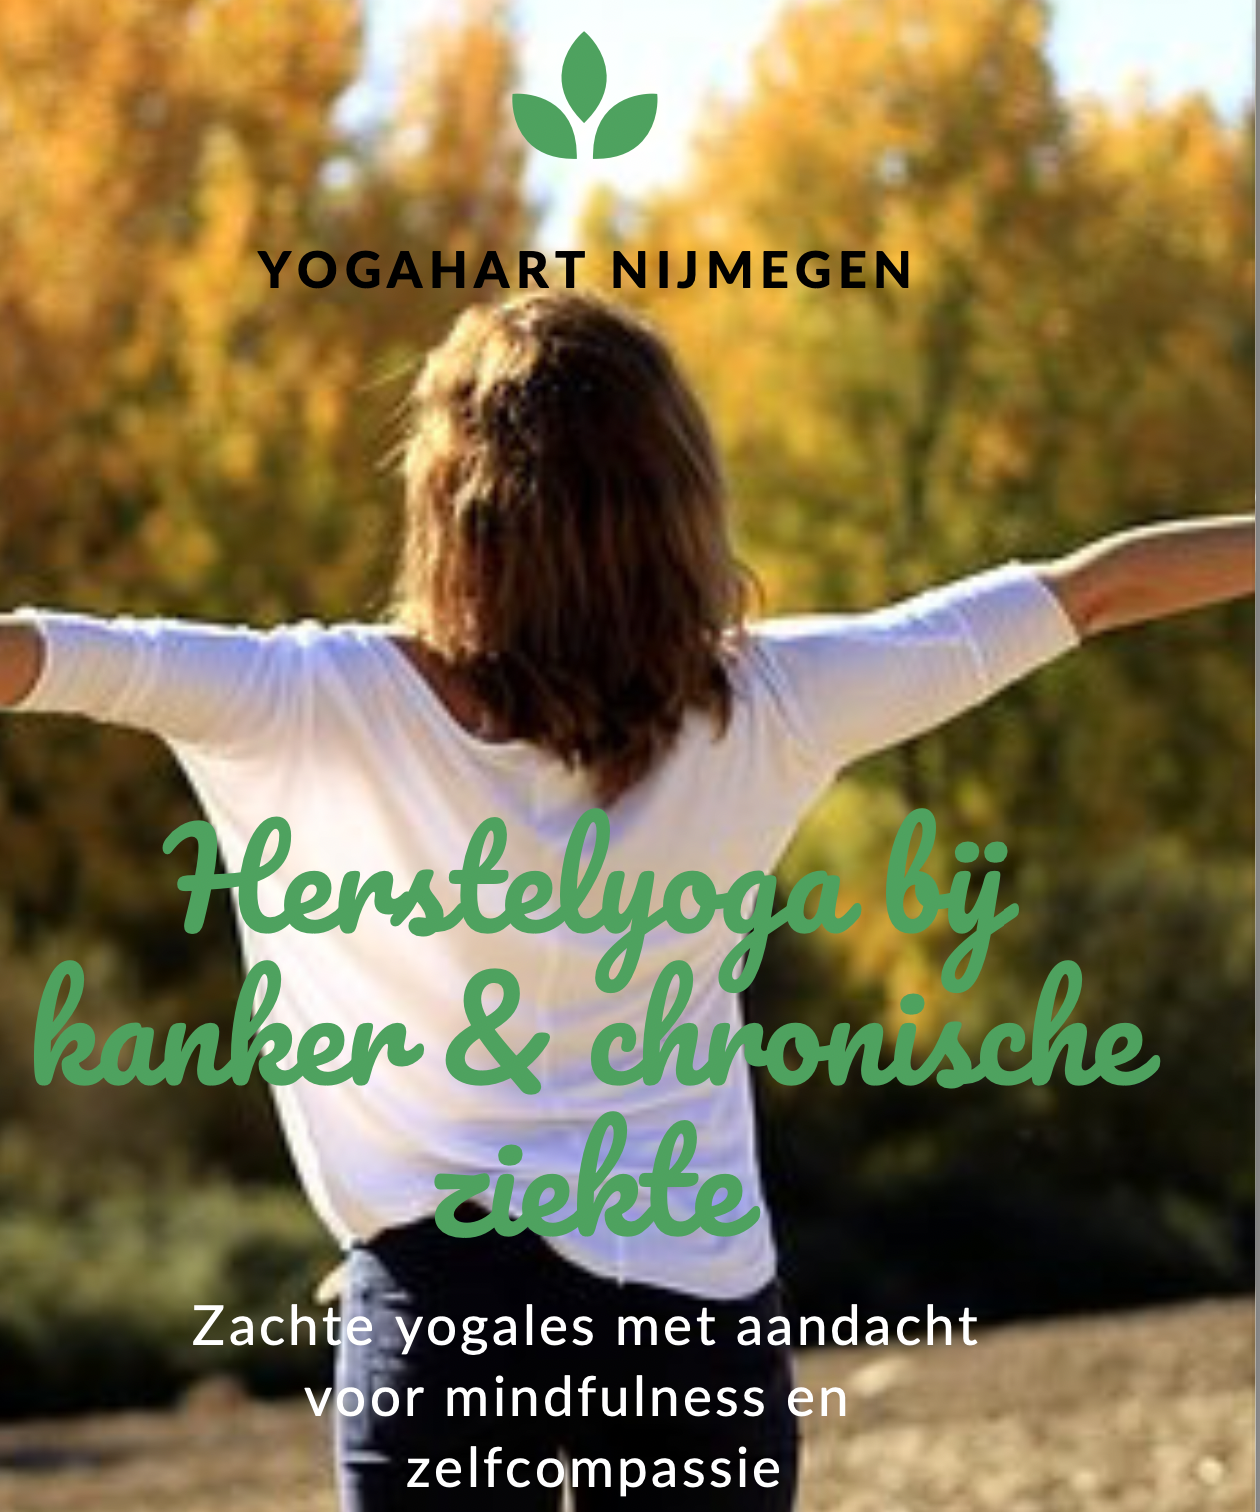 START herstelyoga 2023 Yogahart Nijmegen